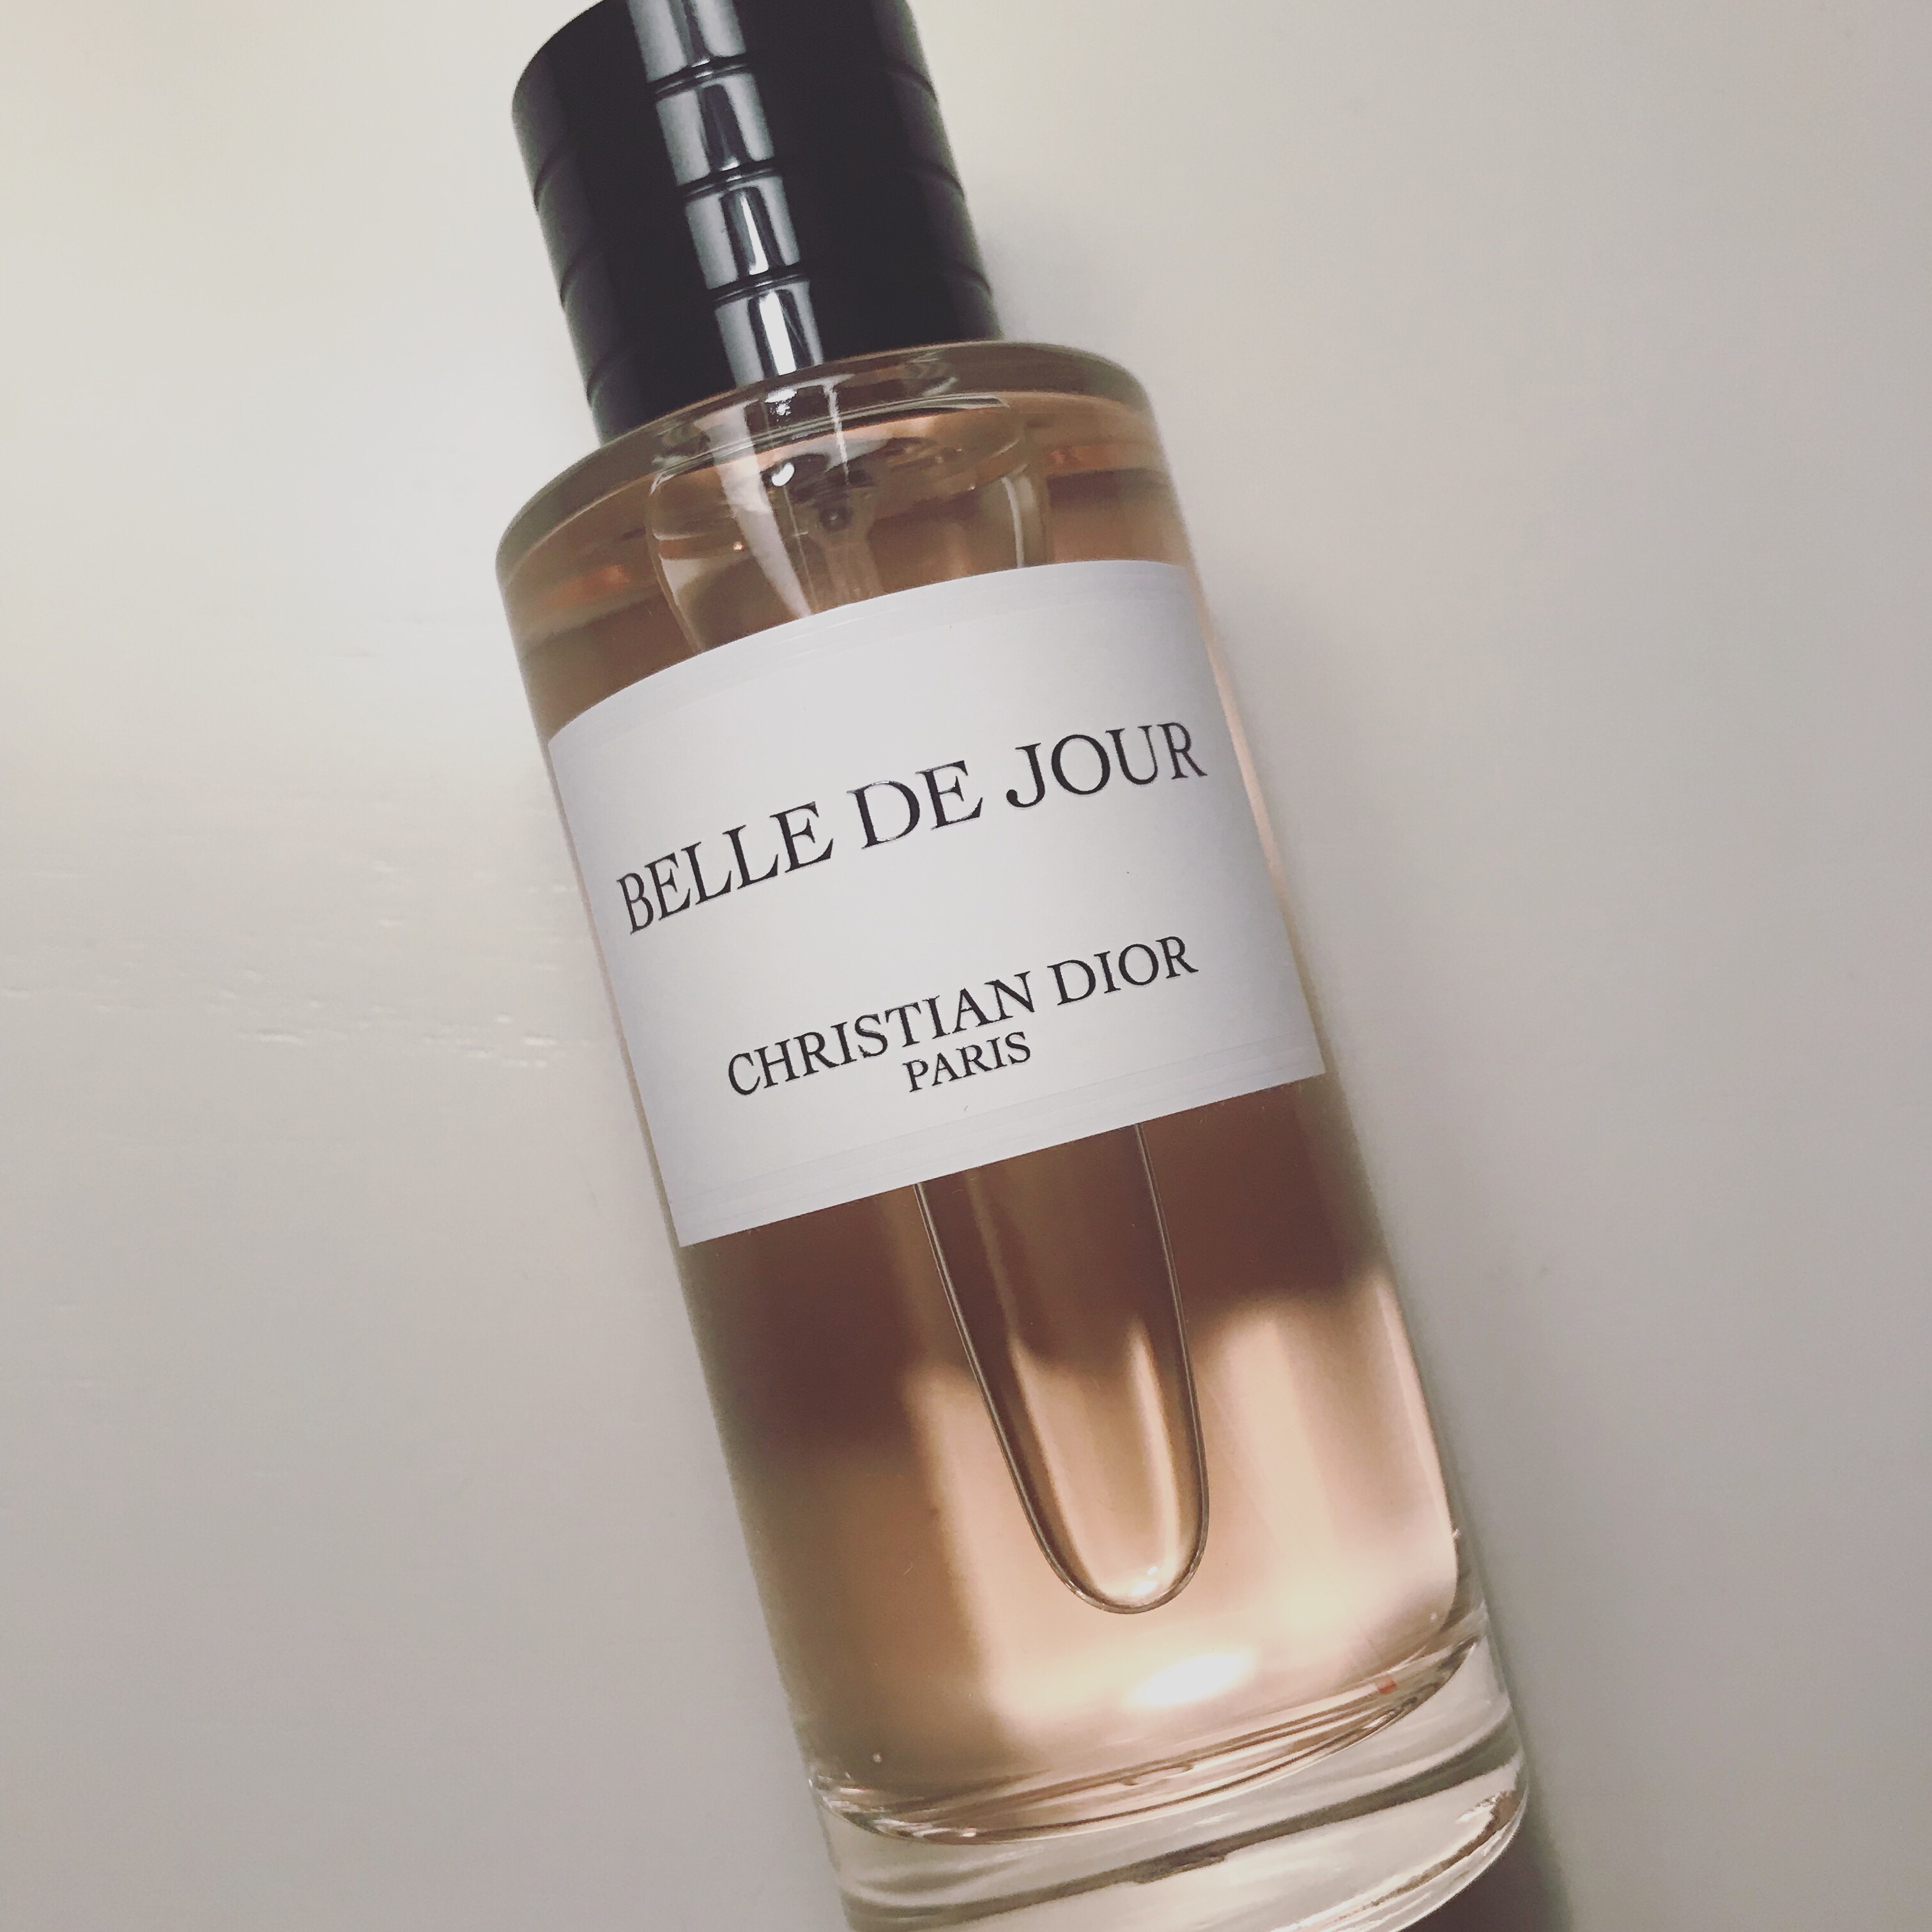 Belle de Jour by Christian Dior – This 